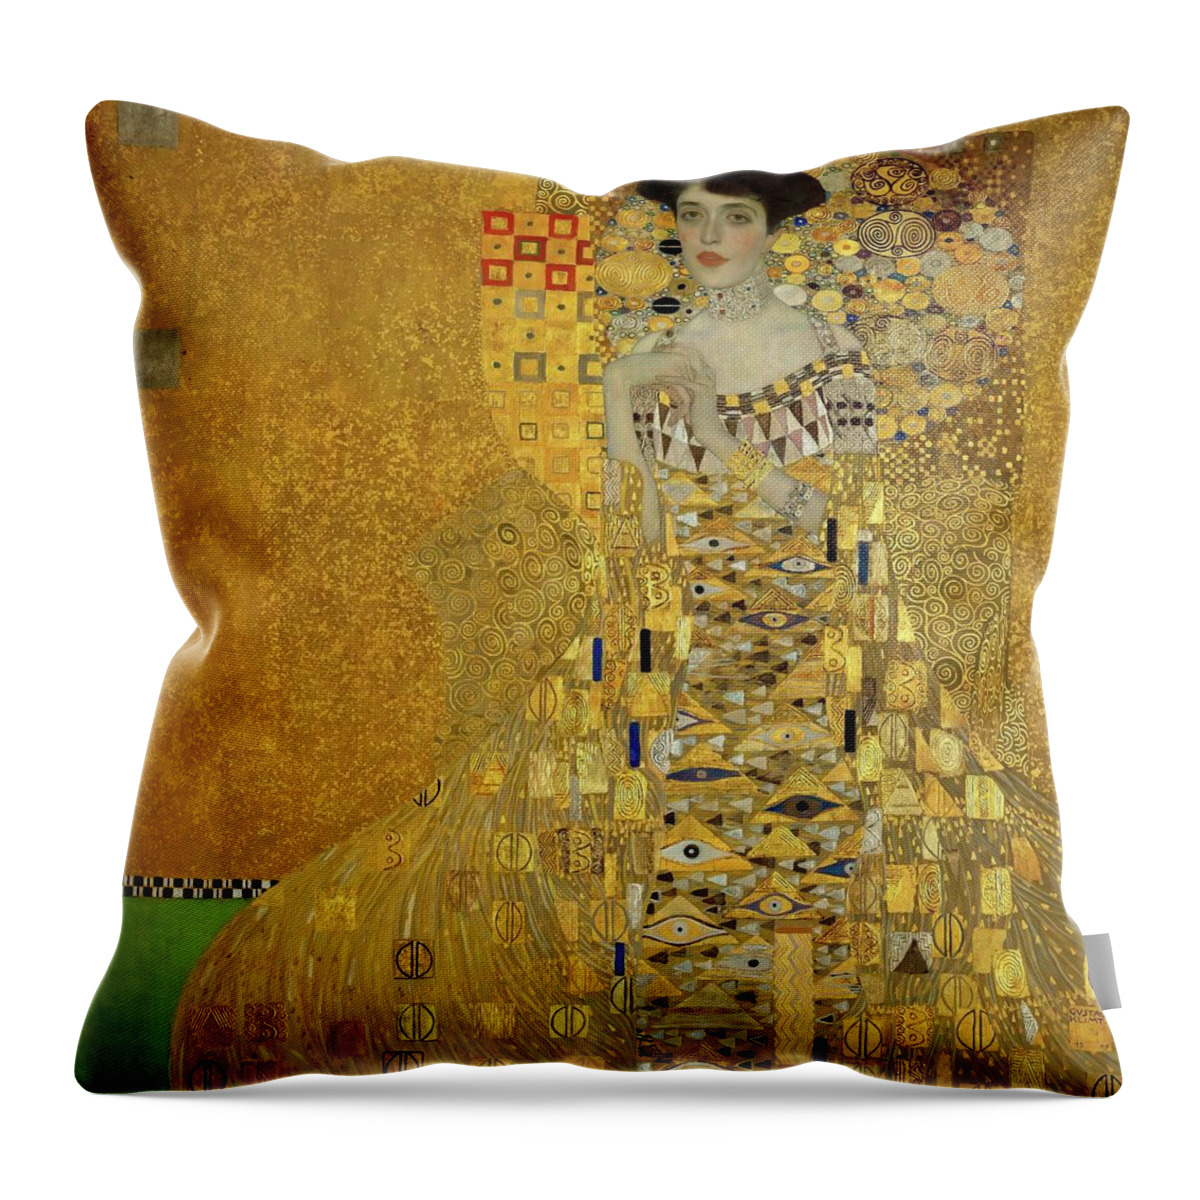 Klimt Throw Pillow featuring the painting Portrait Of Adele Bloch-bauer by Gustav Klimt